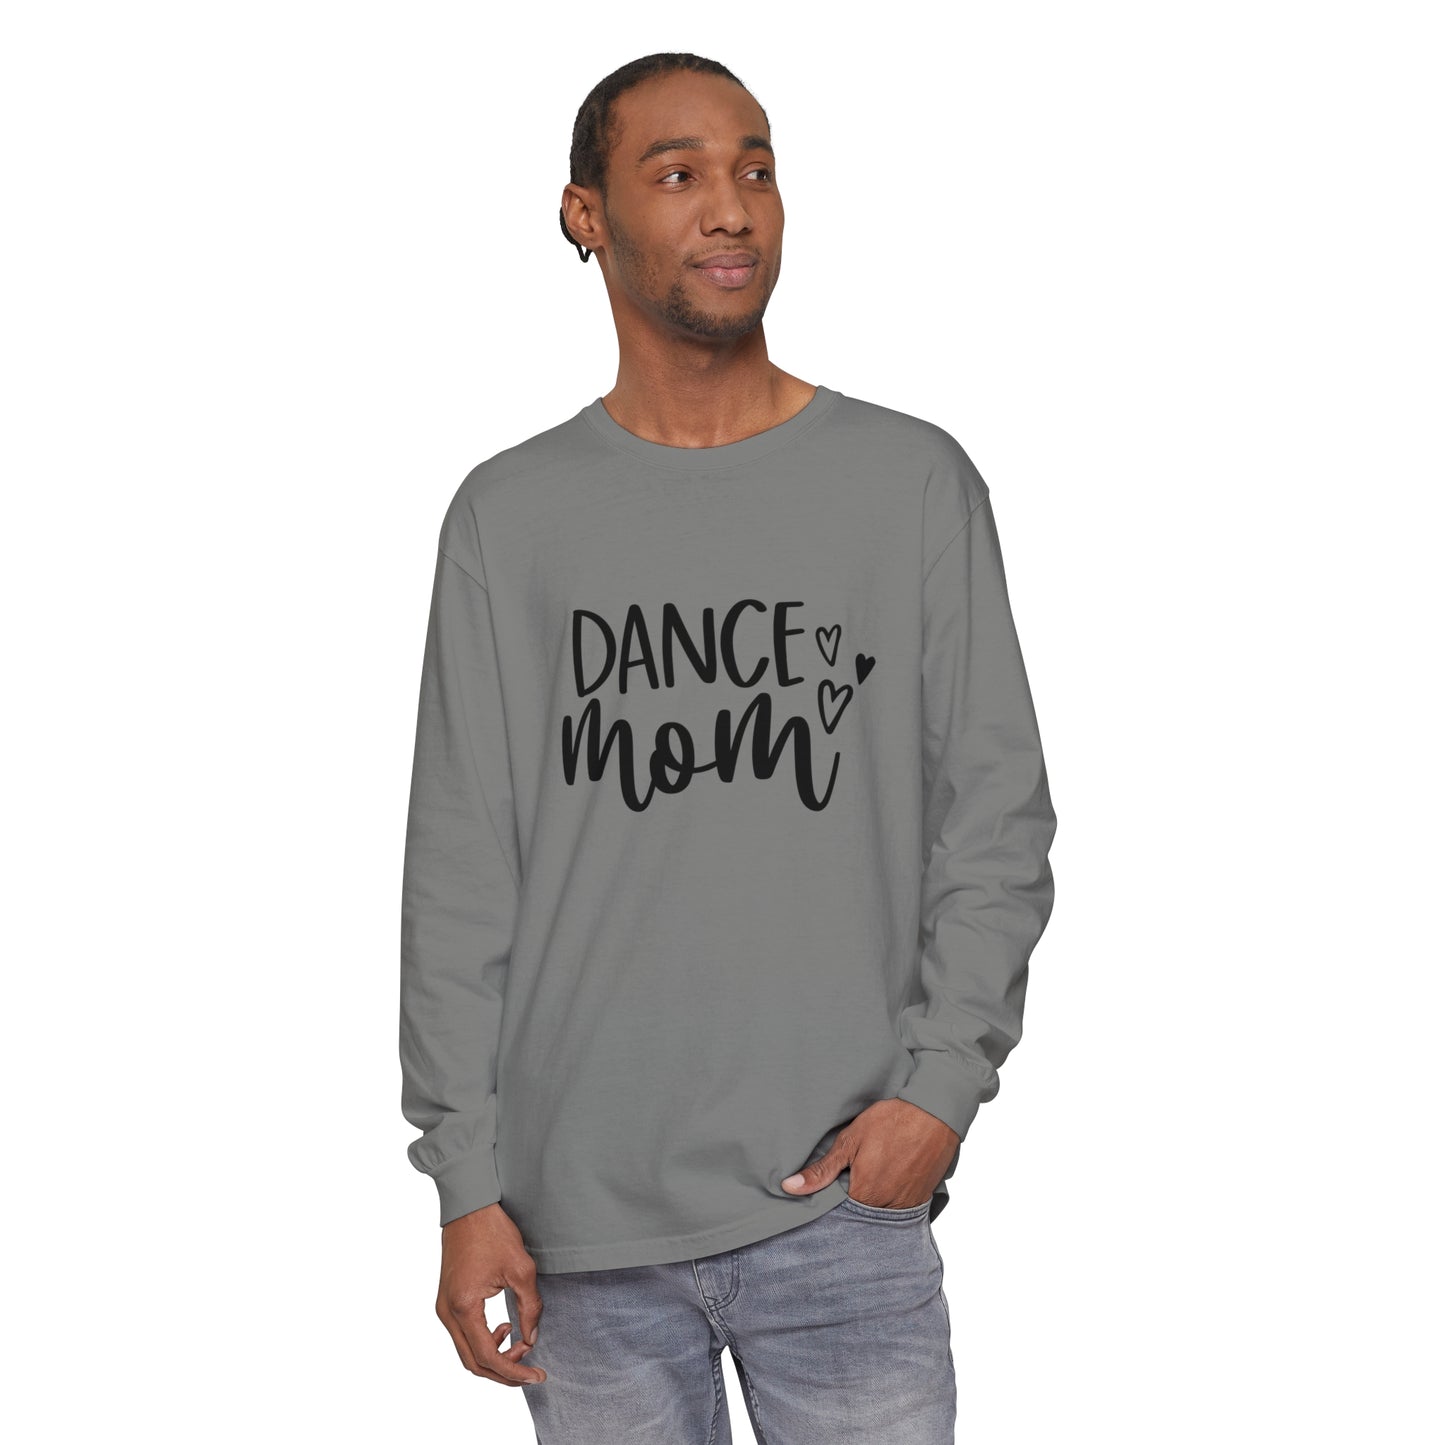 Dance Mom Women's Loose Long Sleeve T-Shirt